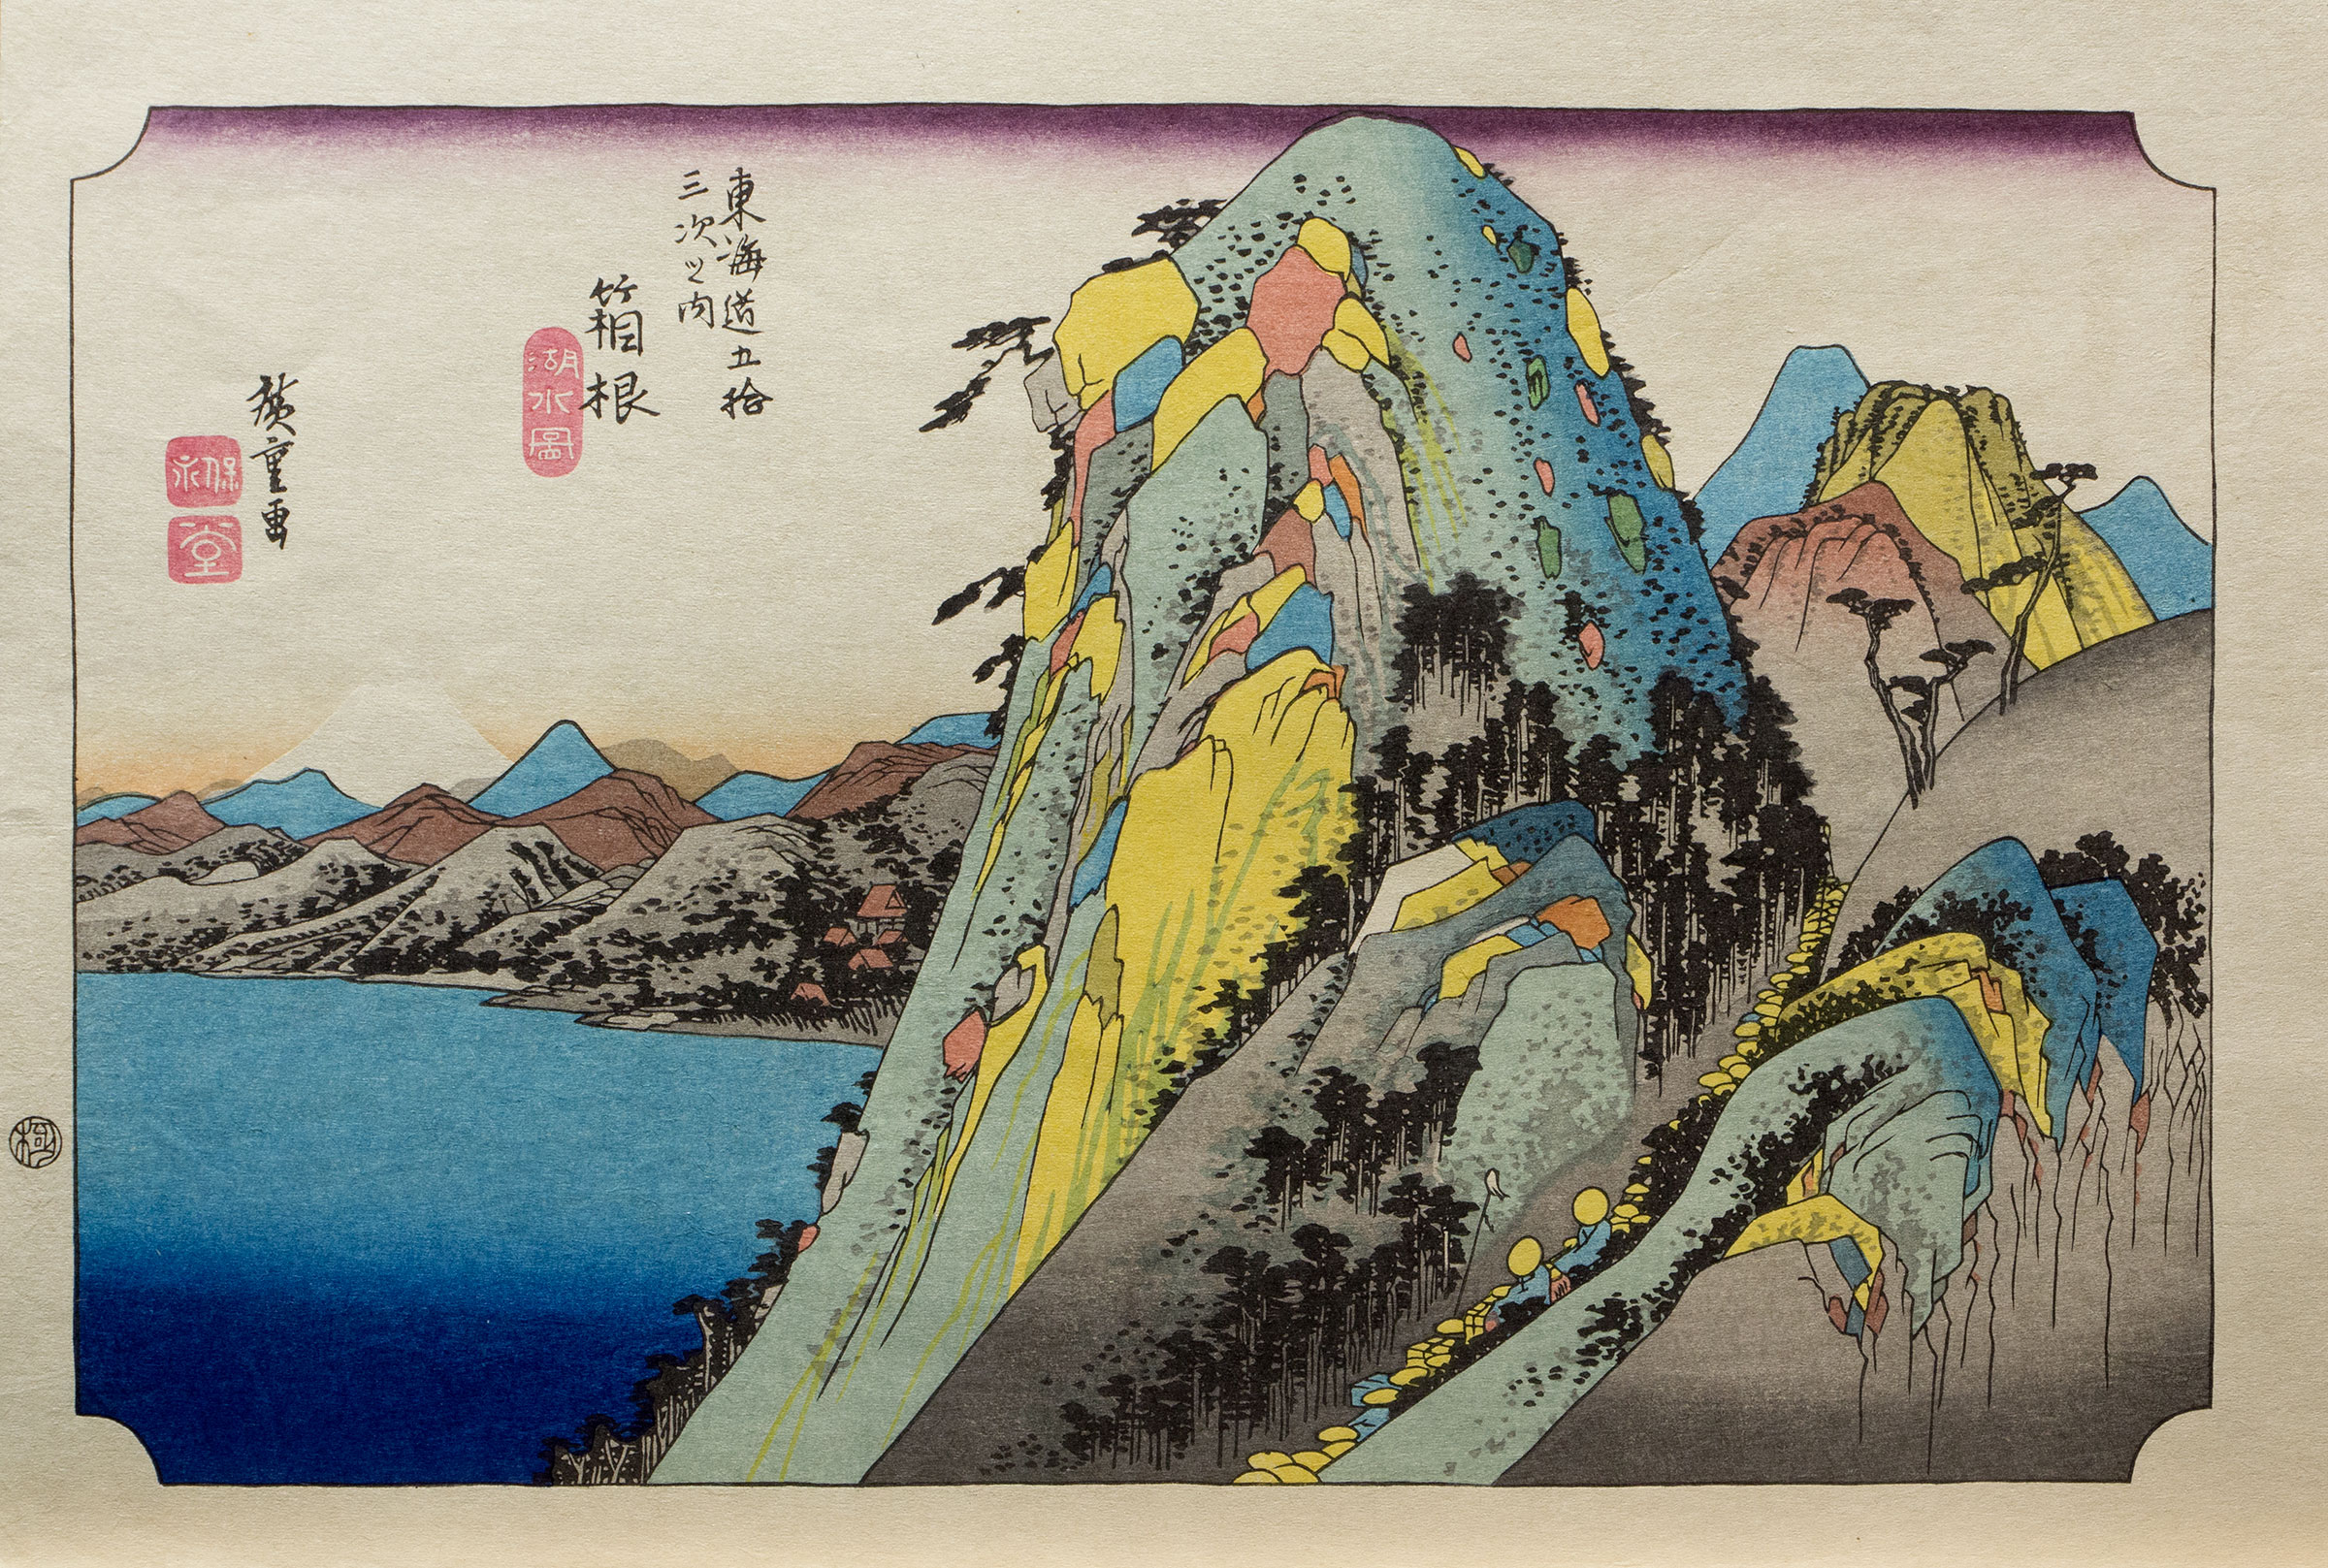 General 2400x1617 Utagawa Hiroshige woodblock print Japanese Art traditional art mountains colorful lake trees landscape cliff Hakone Ukiyo-e digital art